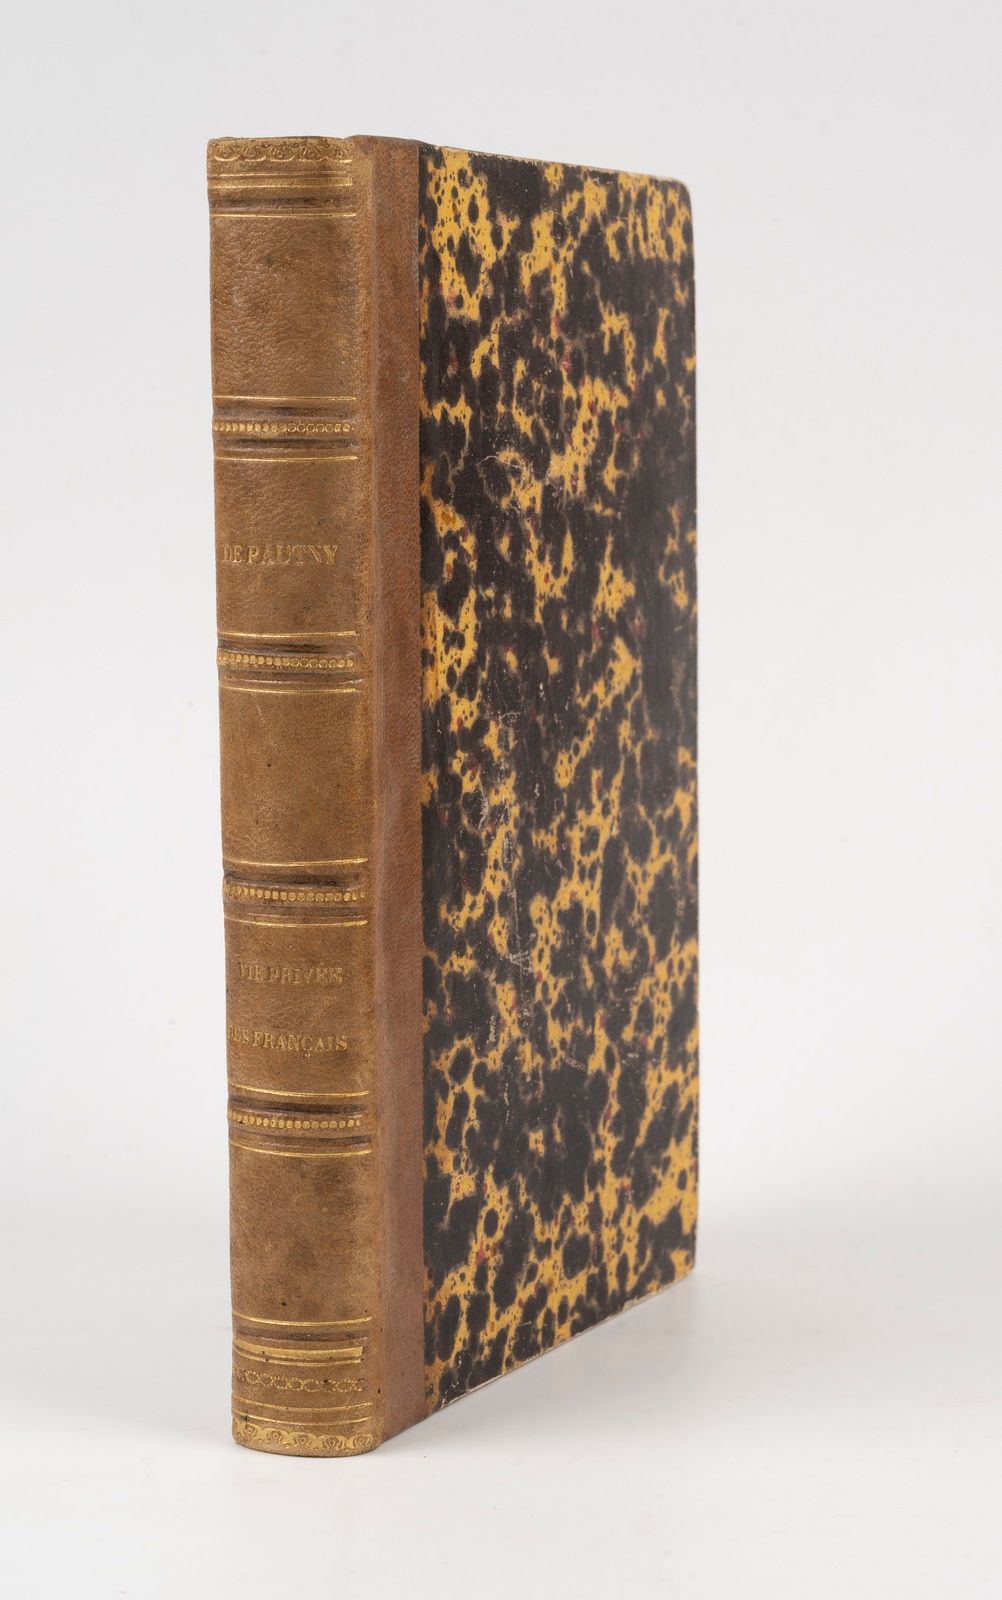 Null CONTANT D'ORVILLE（在PAULMY侯爵的指导下）。弗朗索瓦私人生活史简述》。巴黎，穆塔德，1779年。8开本，半棕色摩洛哥，书脊有装饰&hellip;